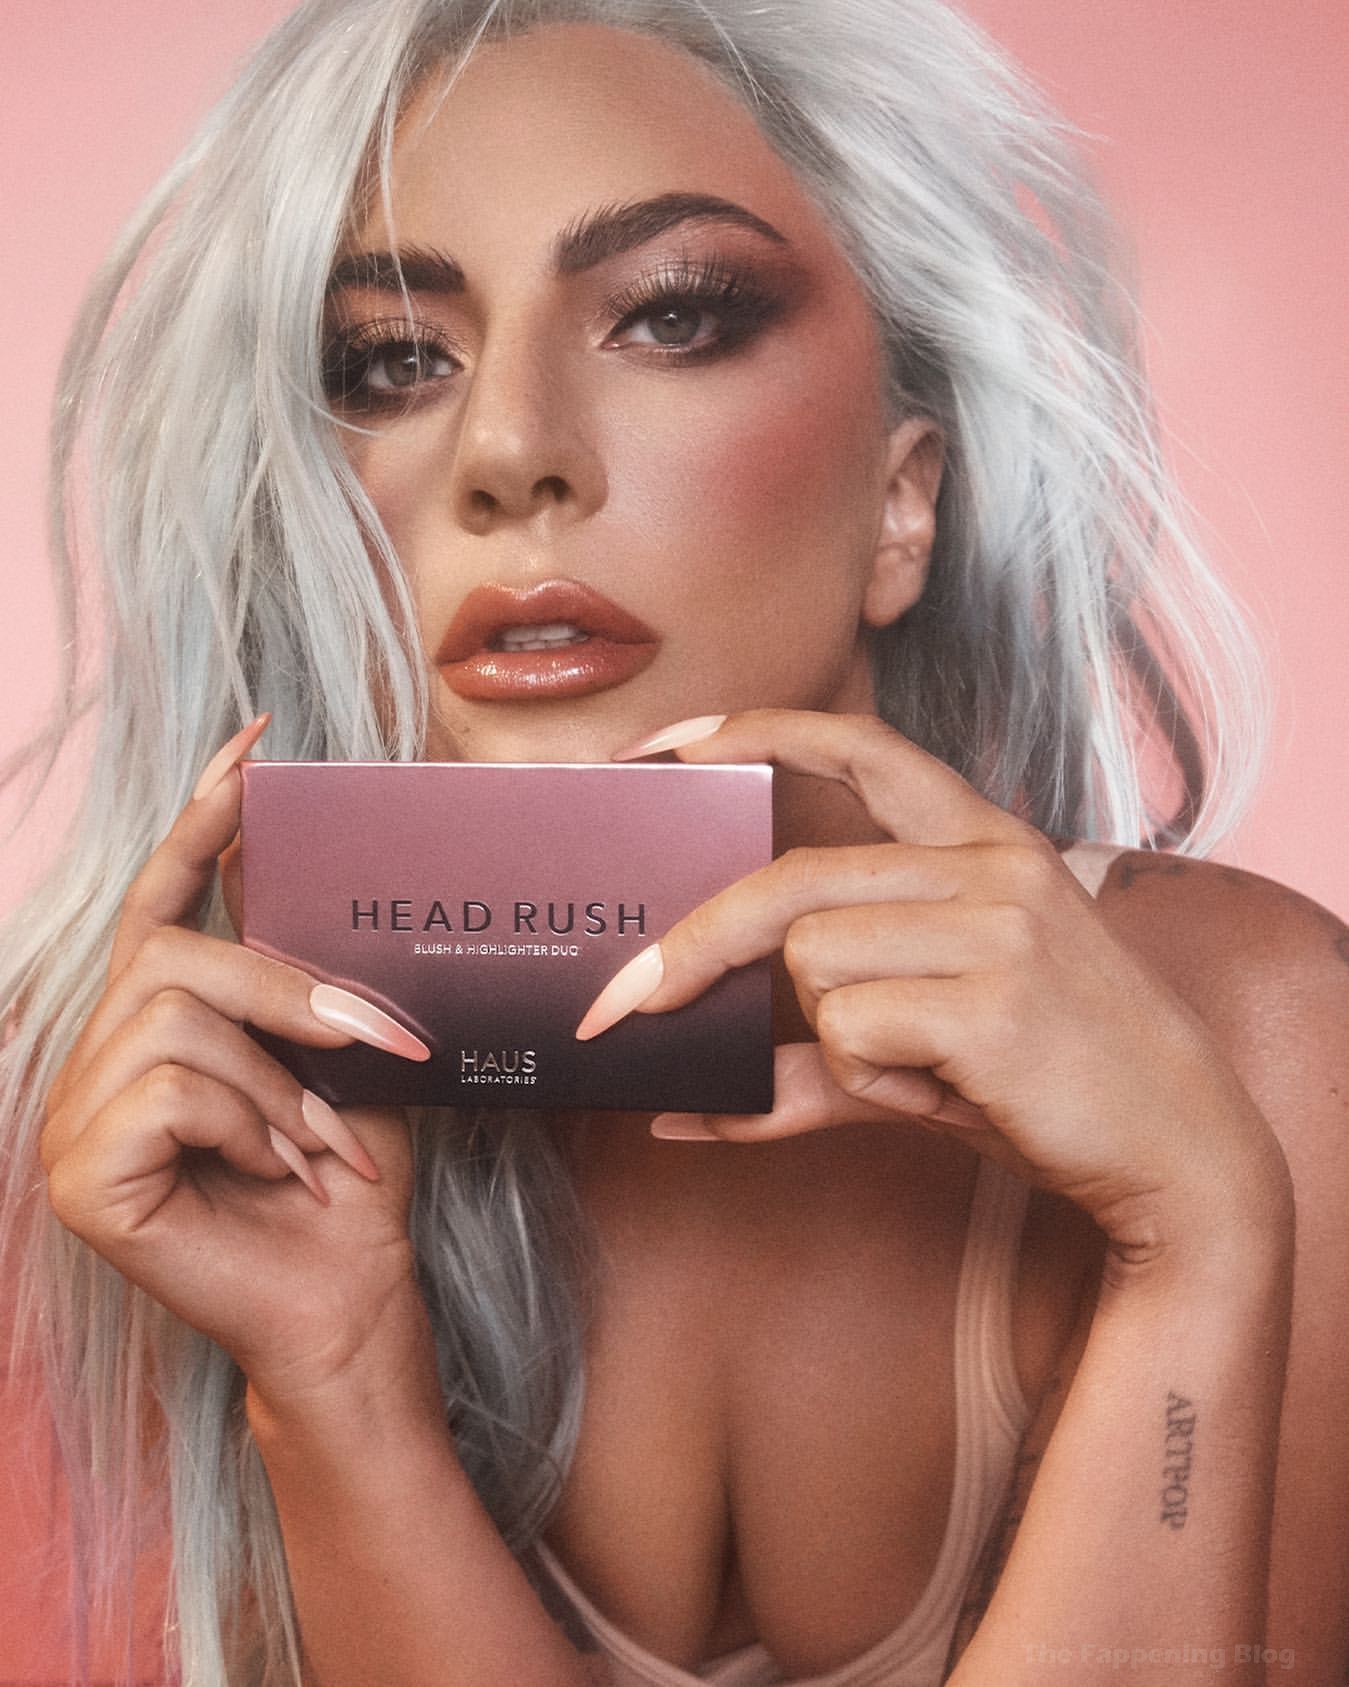 Lady Gaga Strikes a Pose in Glamorous Shoot to Plug New Haus Make-up Line (5 Photos)